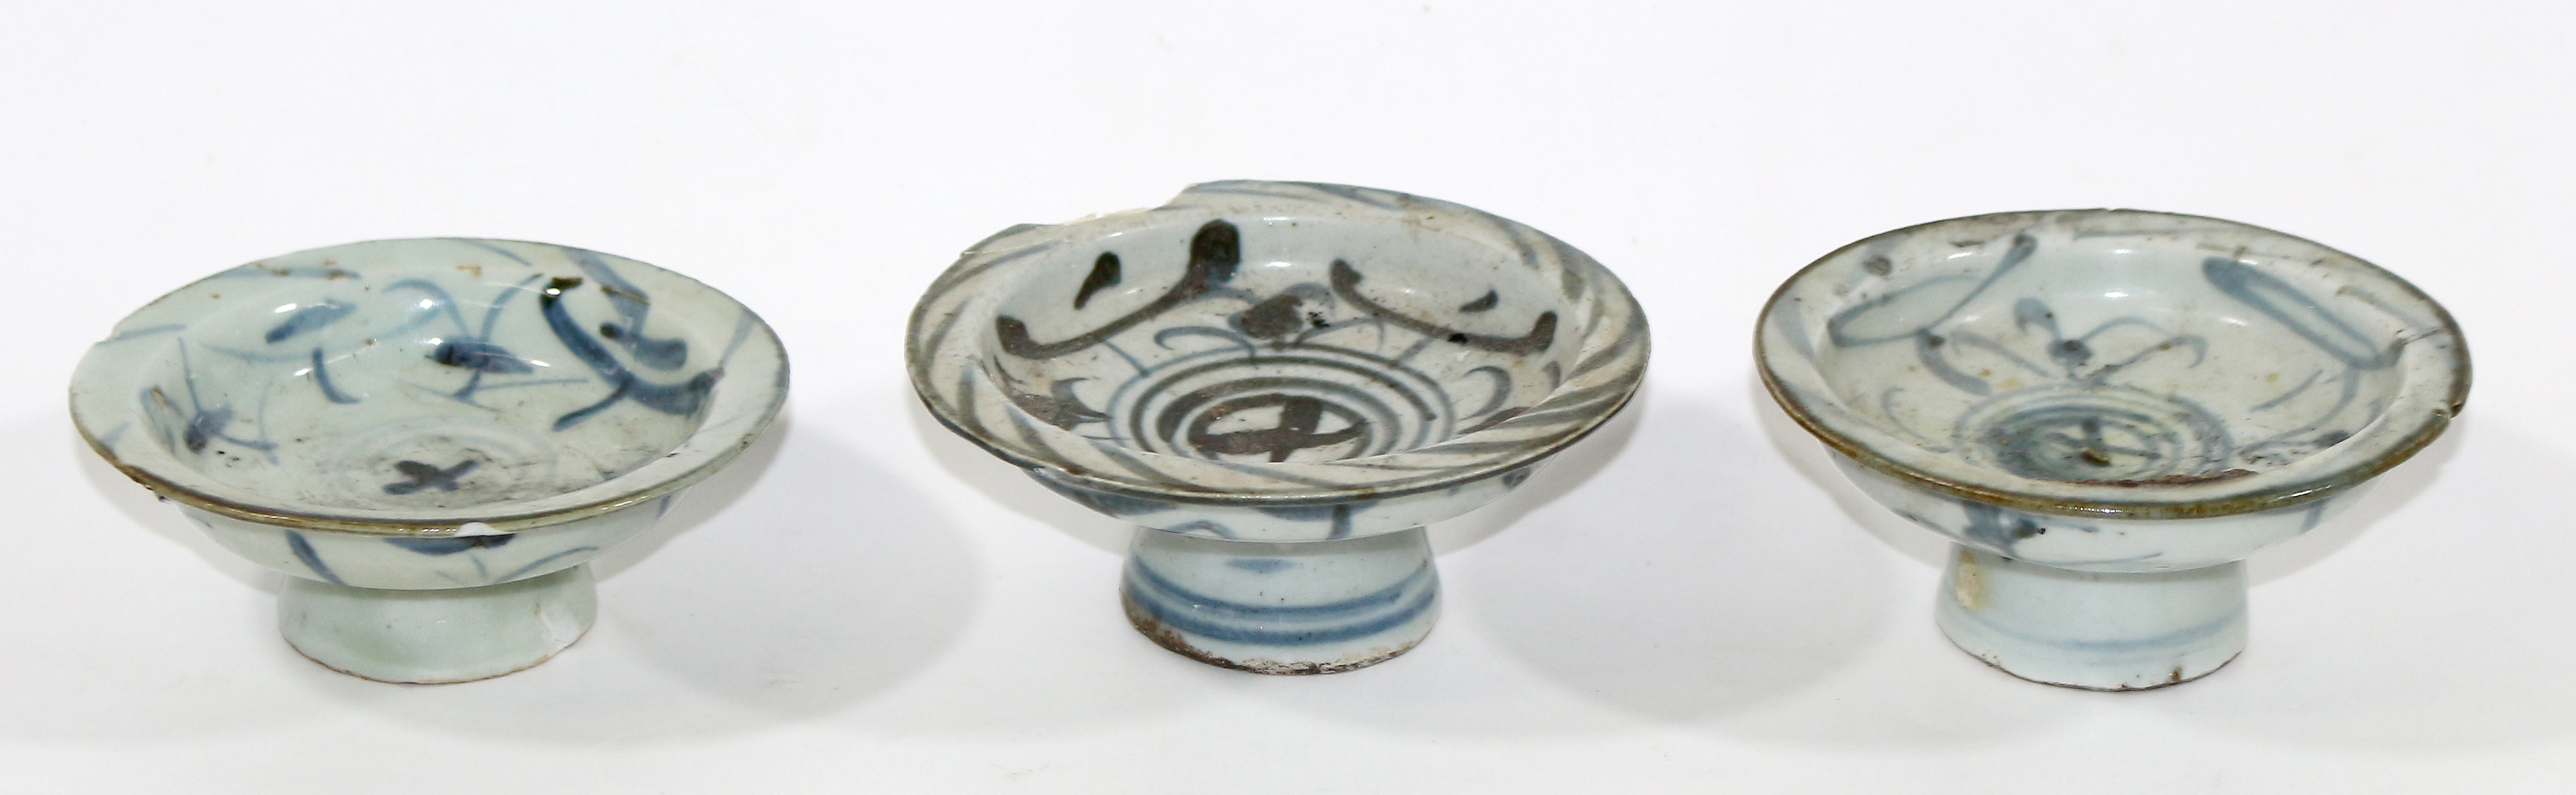 2 Keramiken China, Ostasien. | Bild Nr.1